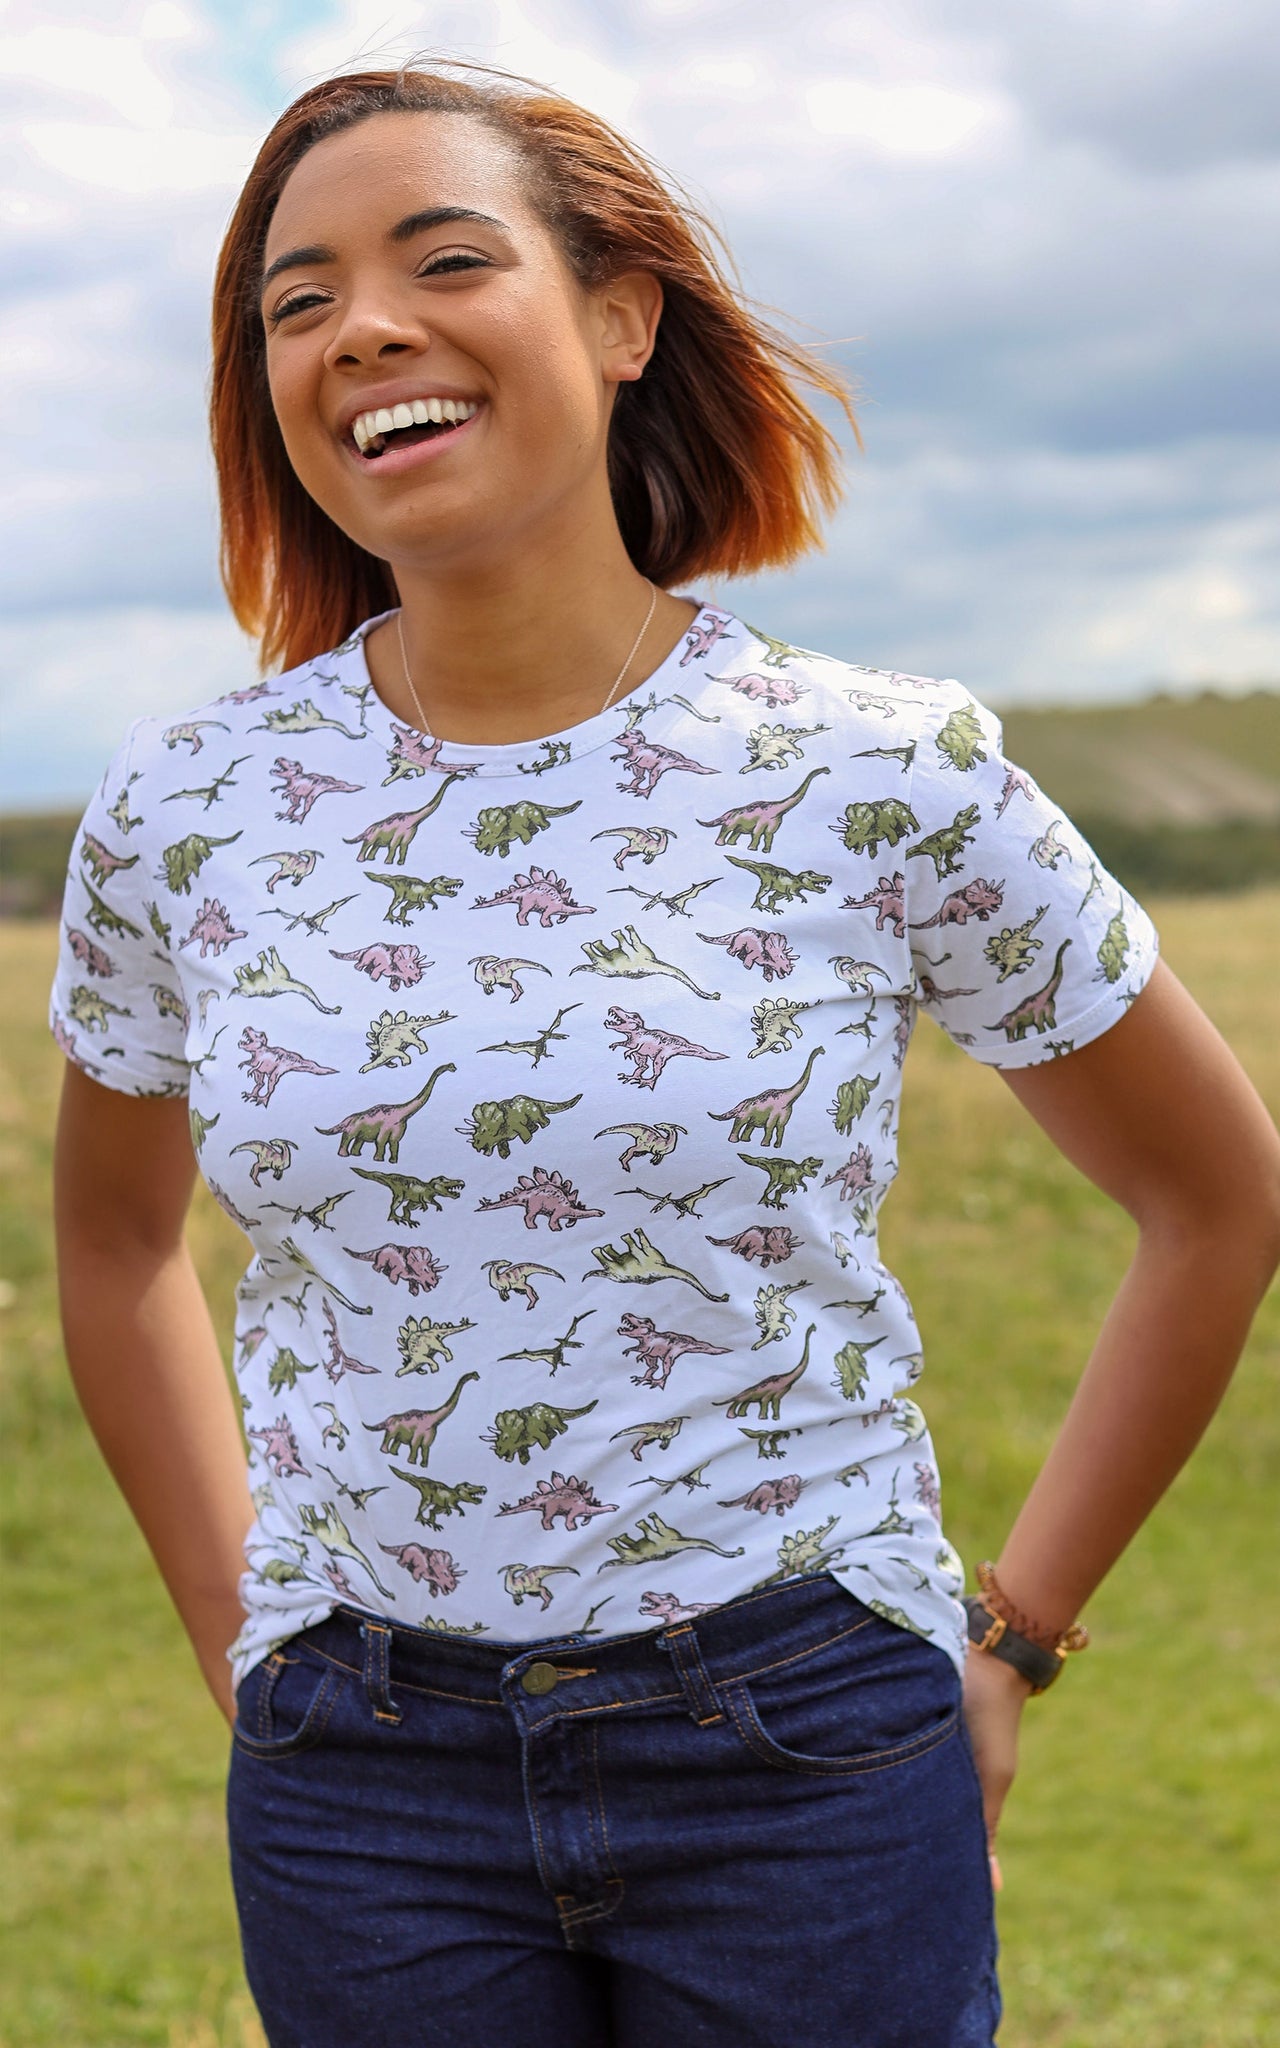 Unisex T-Shirt Dinosaurs On White